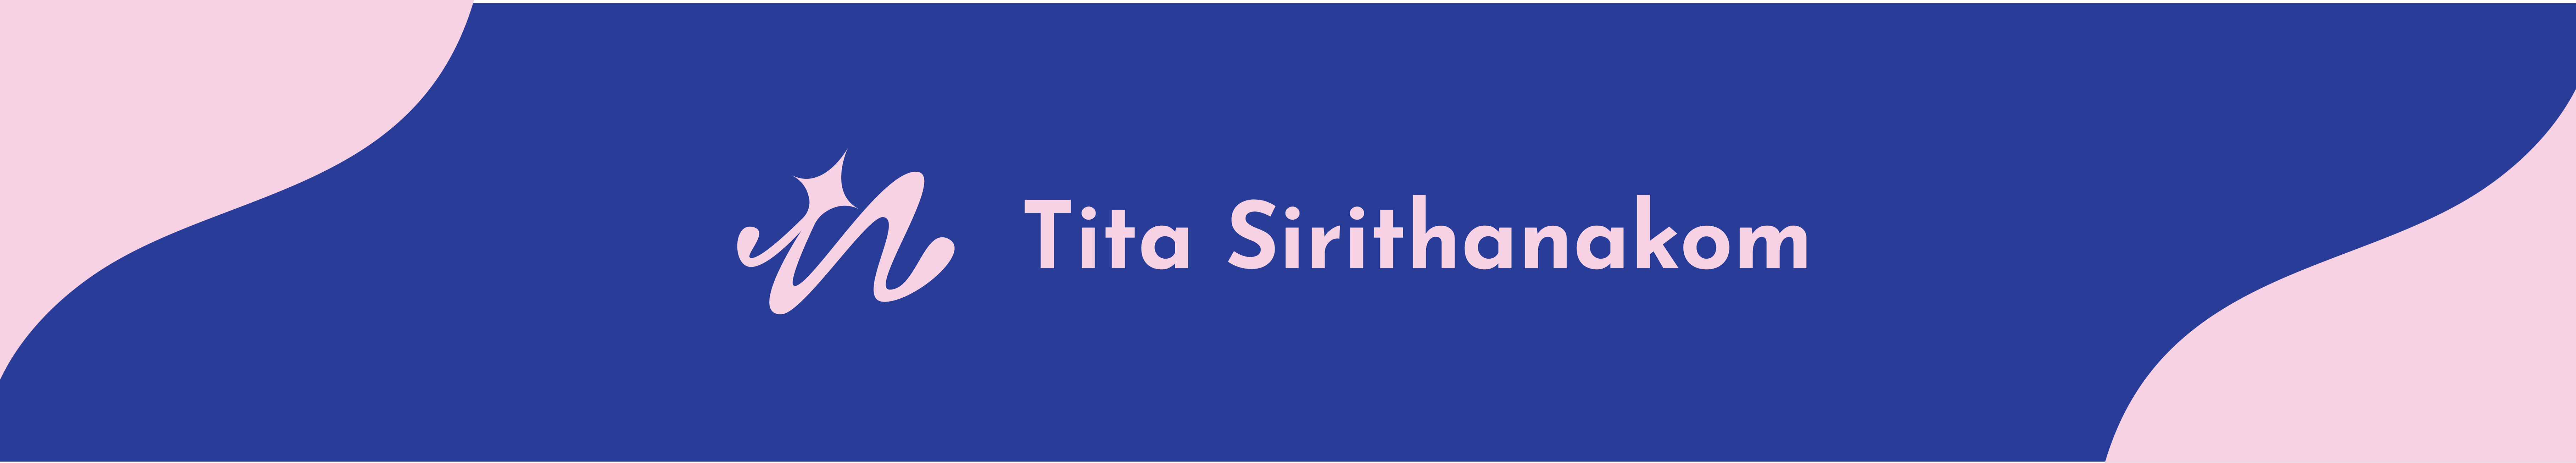 Баннер профиля Tita Sirithankom